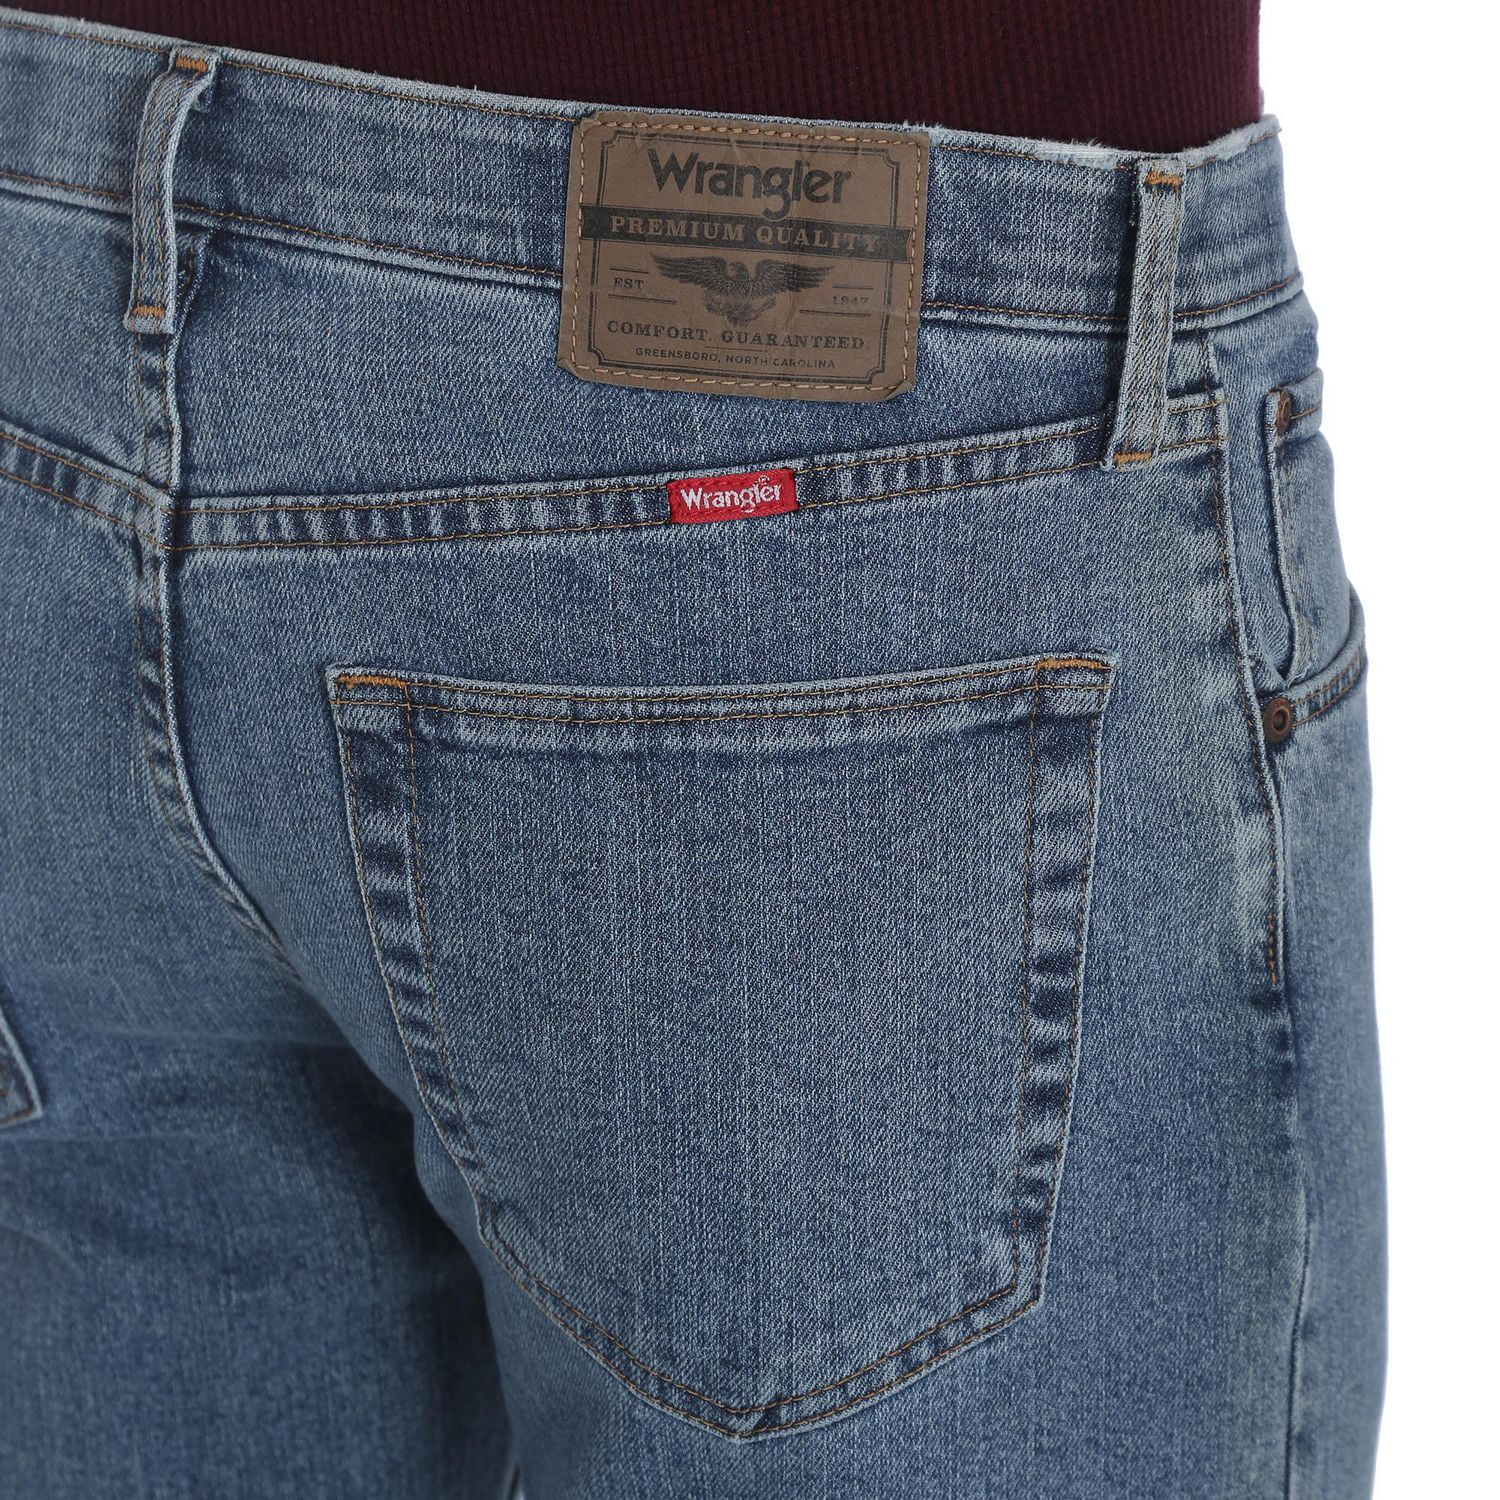 Wrangler Men's Performance Regular Fit Jean, Regular fit, 5 pocket styling